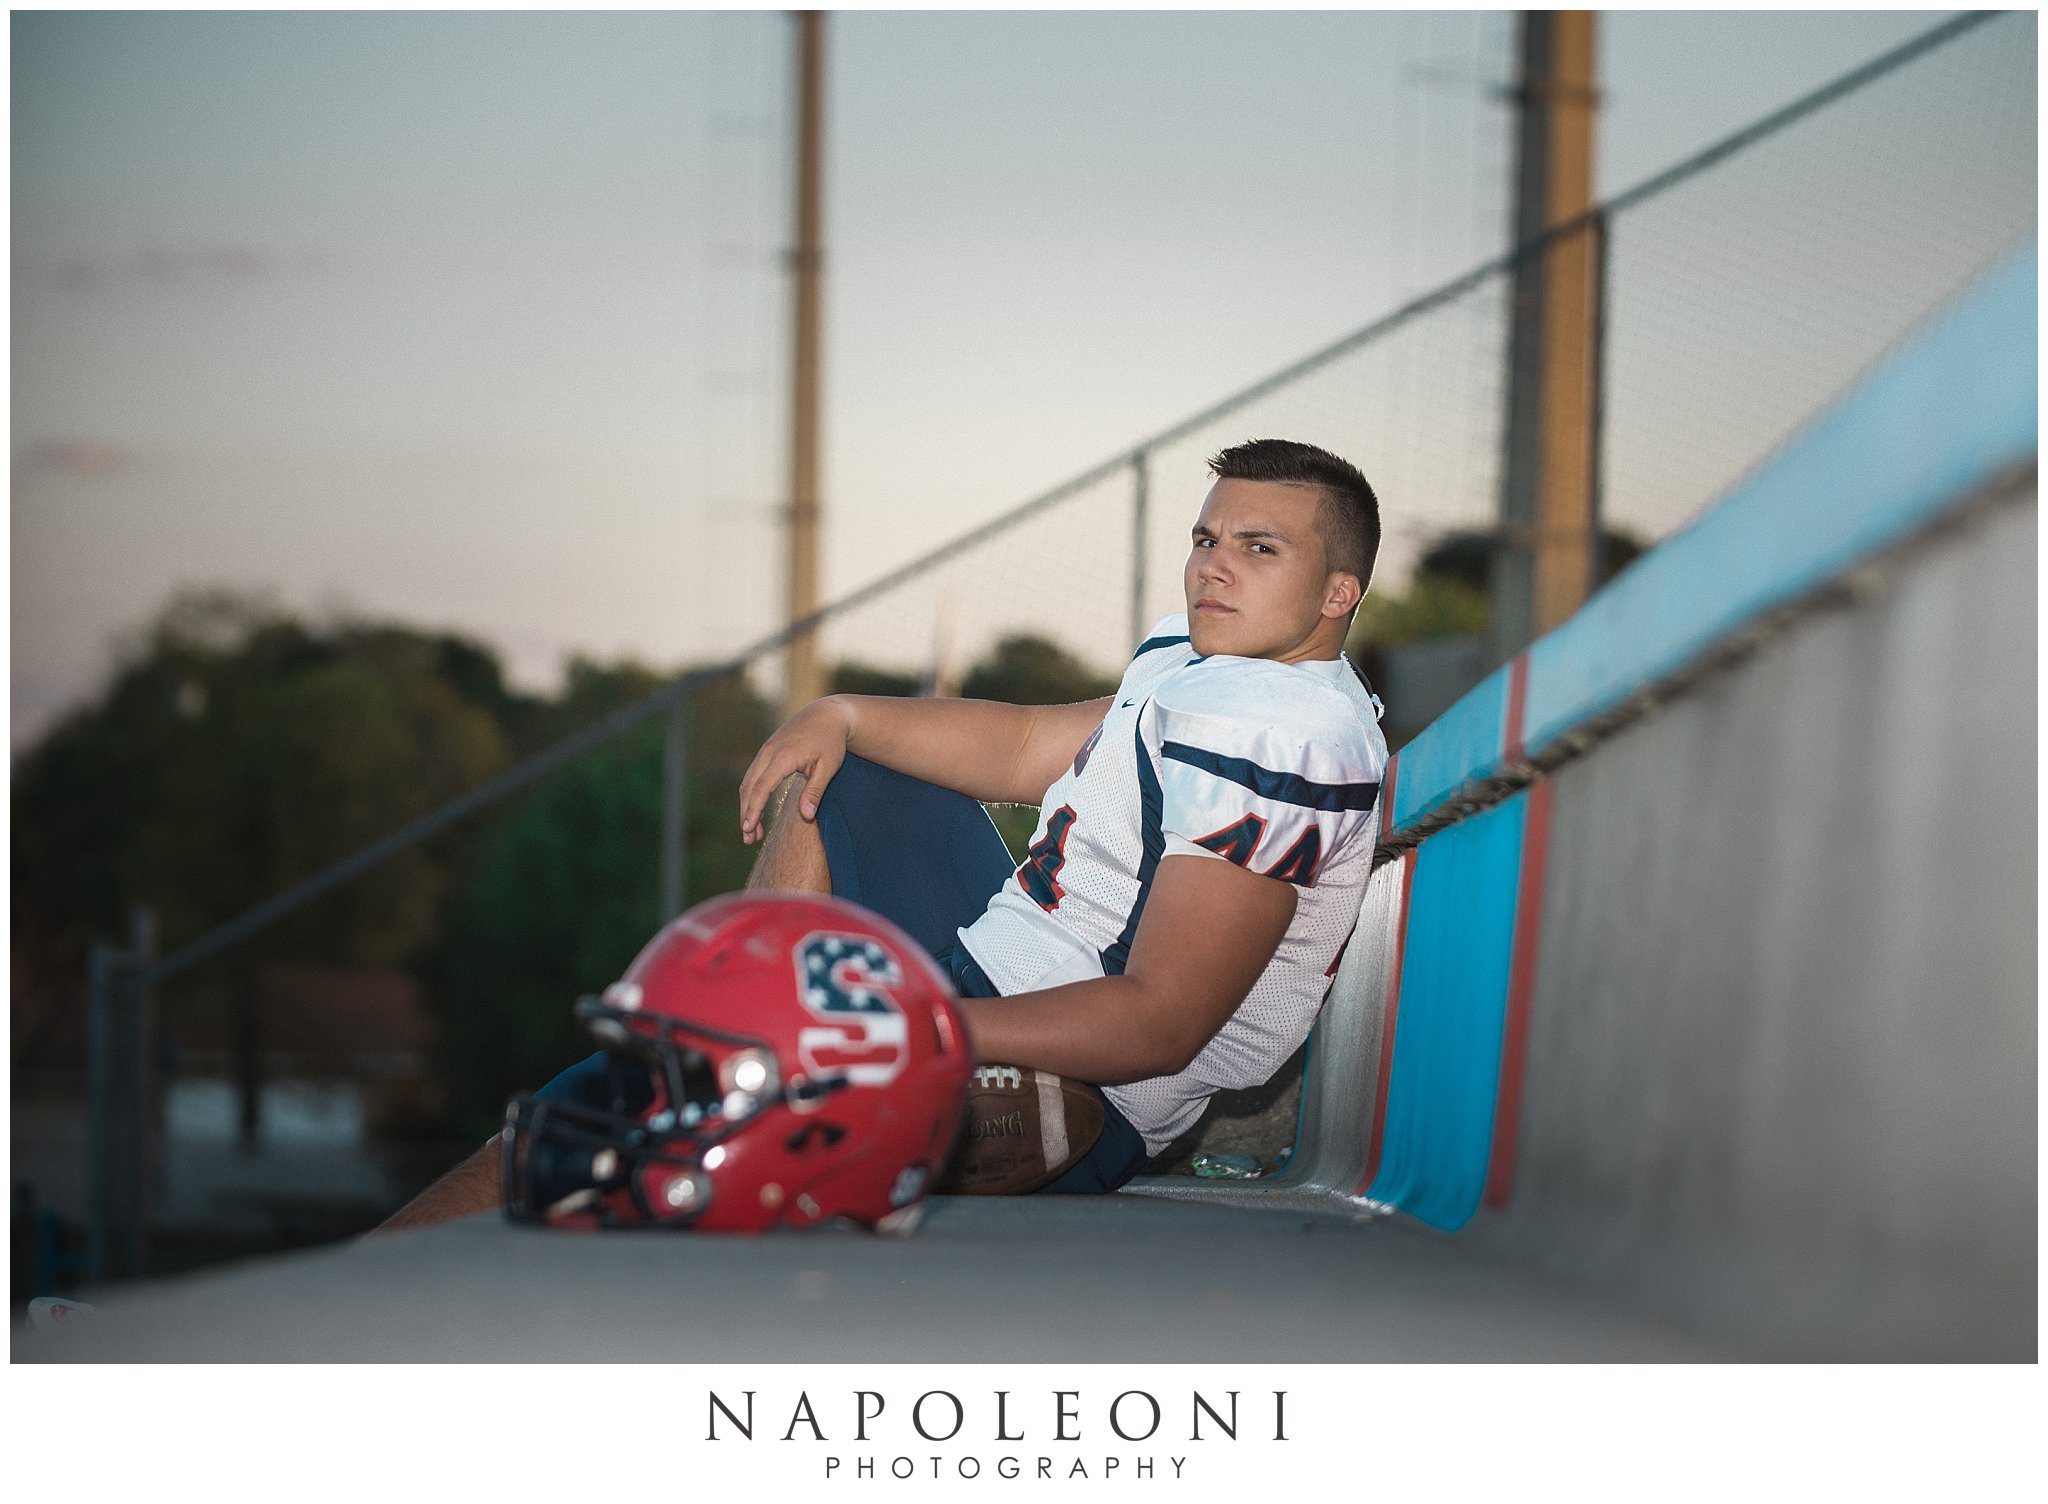 NapoleoniPhotographyLLC_3329